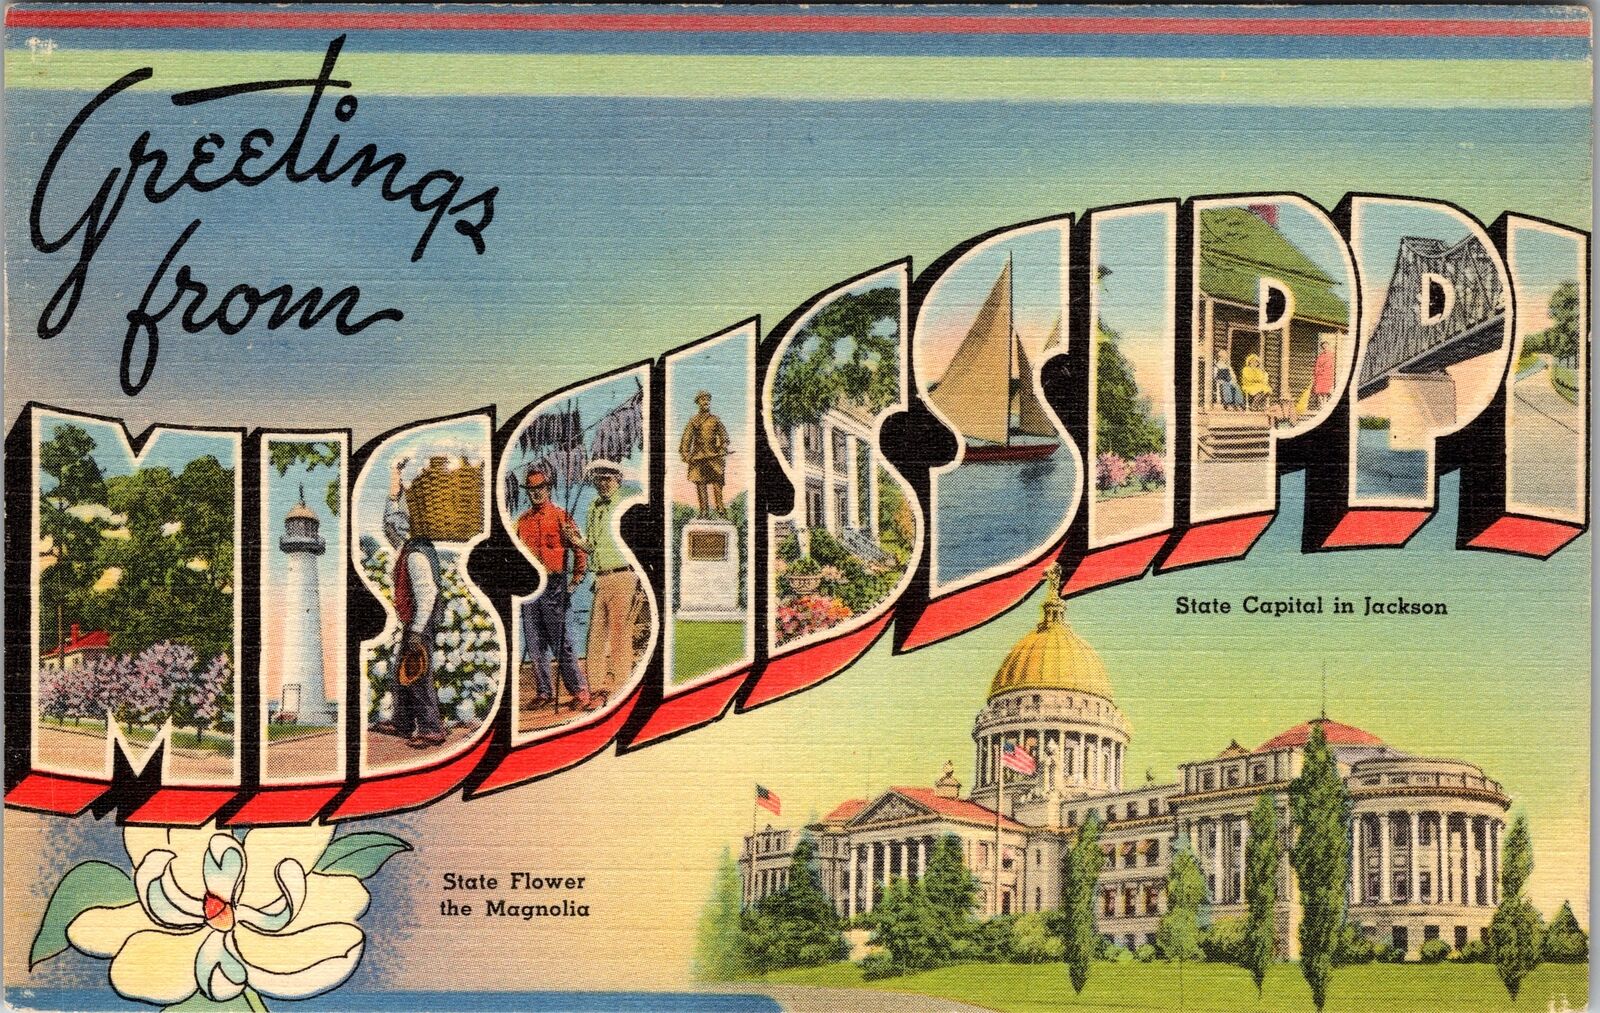 MS-Mississippi, Scenic General Letter Greetings, Vintage Postcard